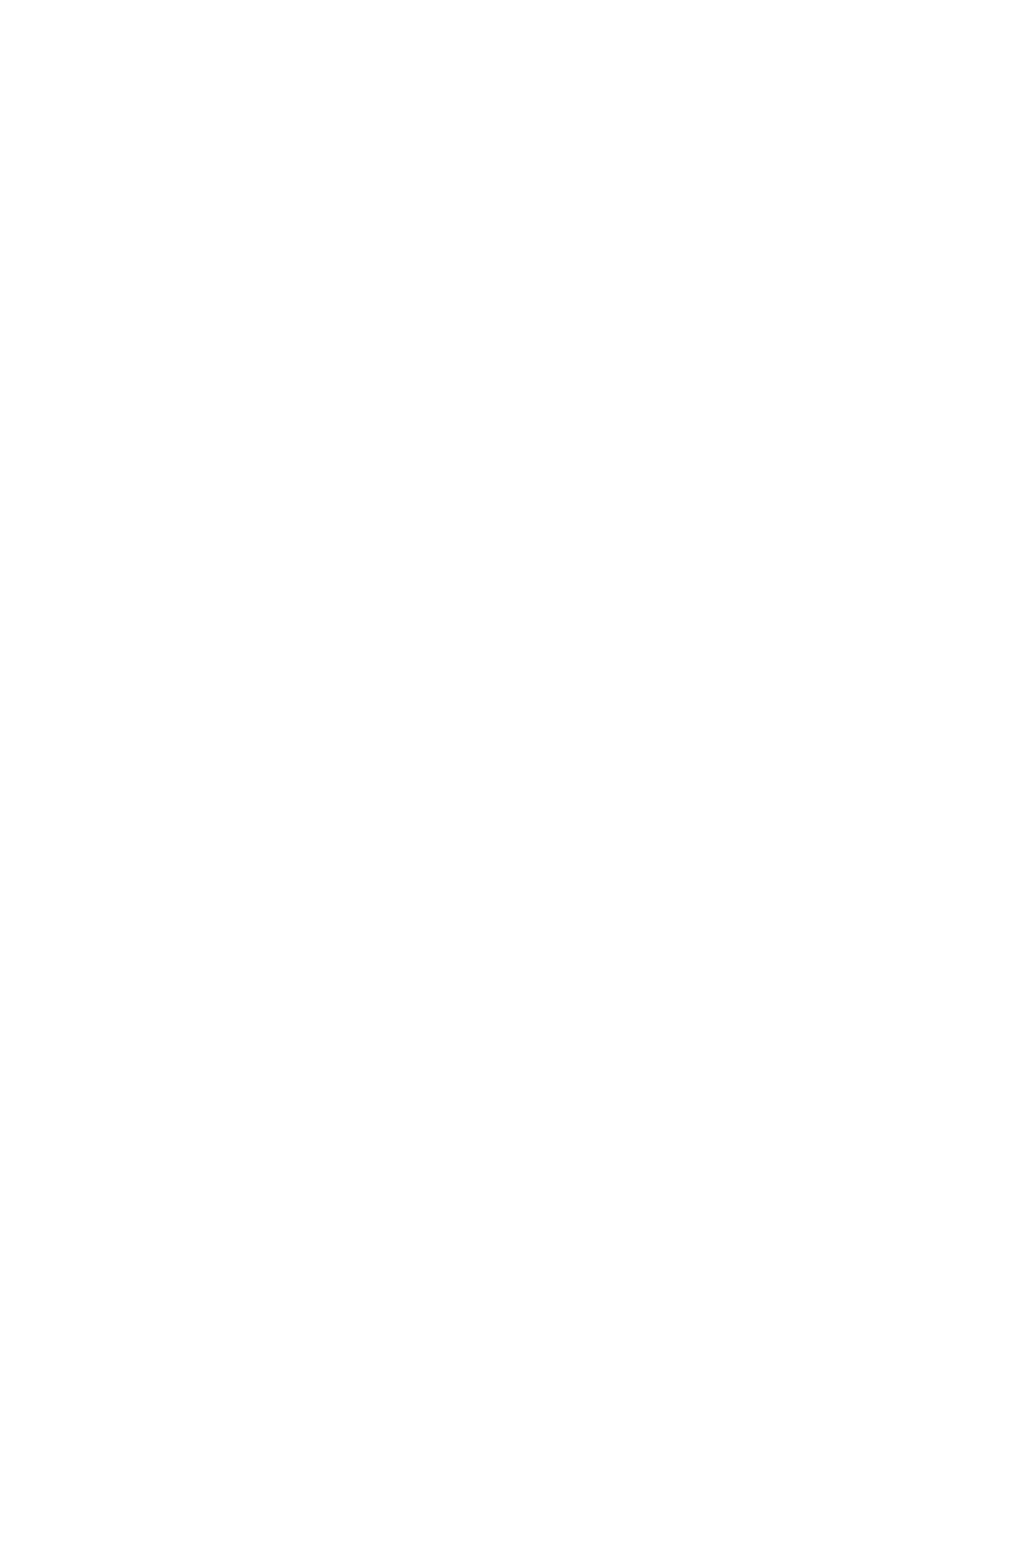 Boohoo Group logo for dark backgrounds (transparent PNG)